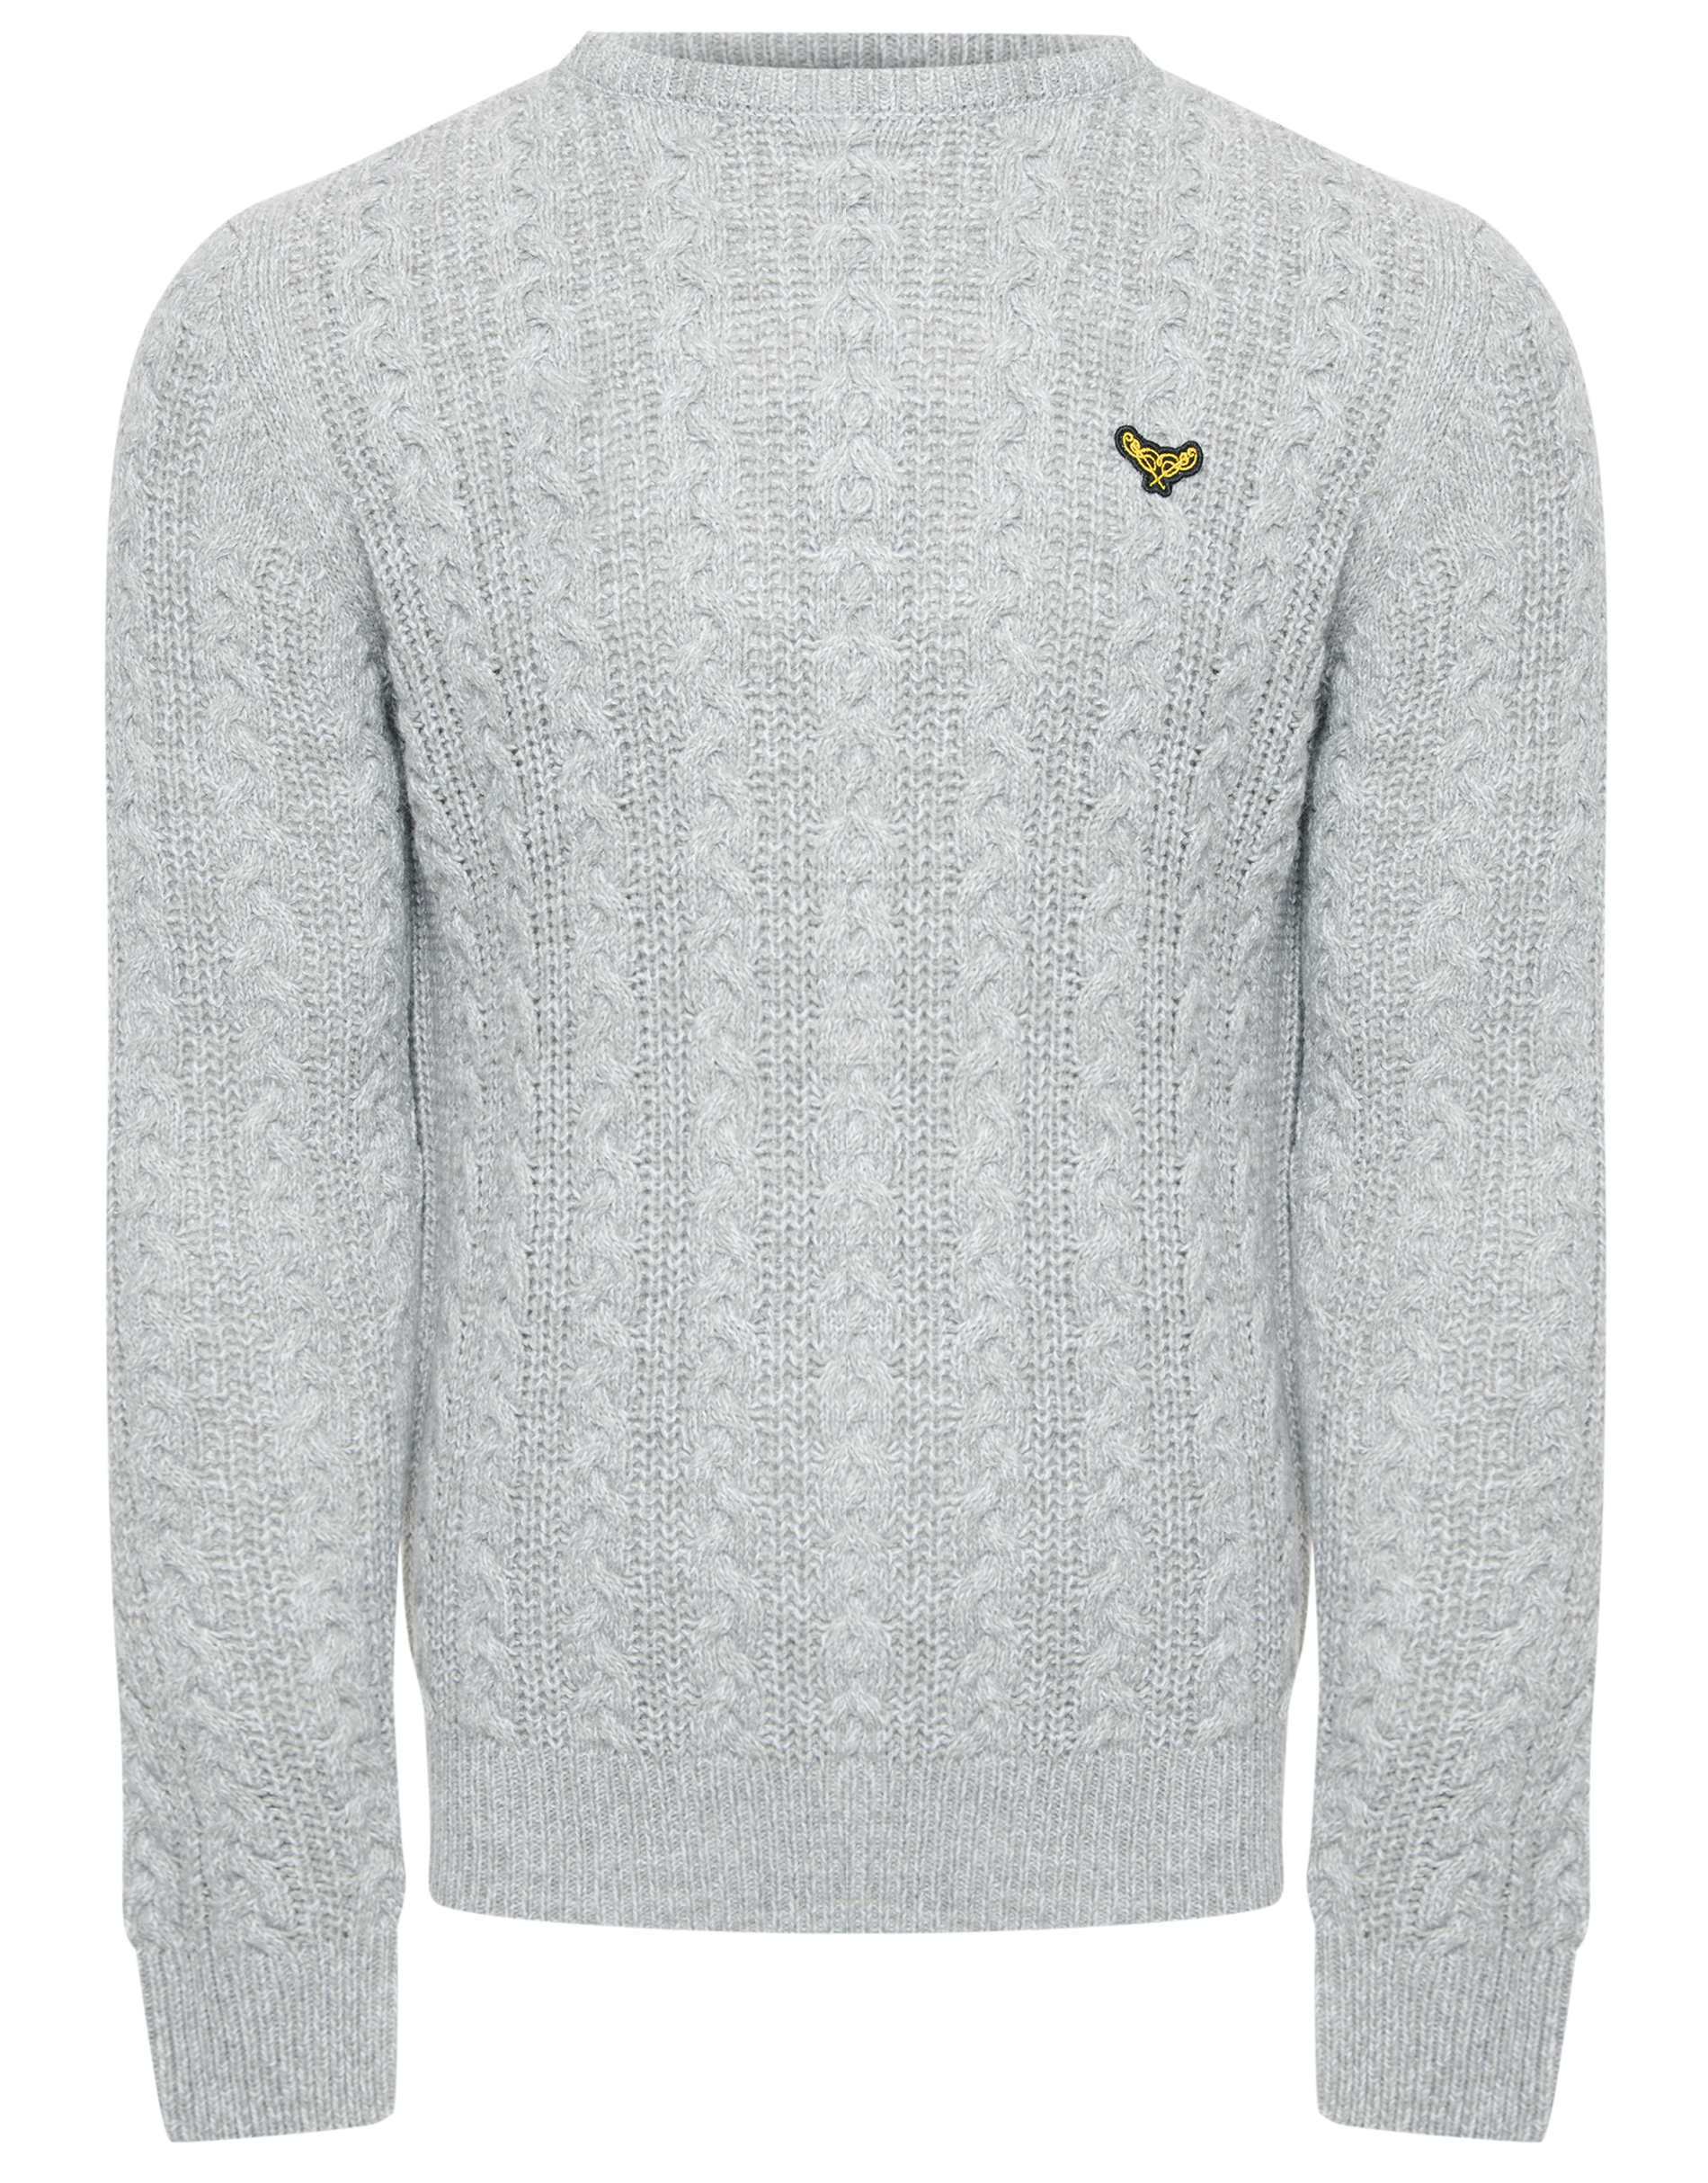 Пуловер Threadbare Strick Ely, светло серый пуловер threadbare strick reed черный